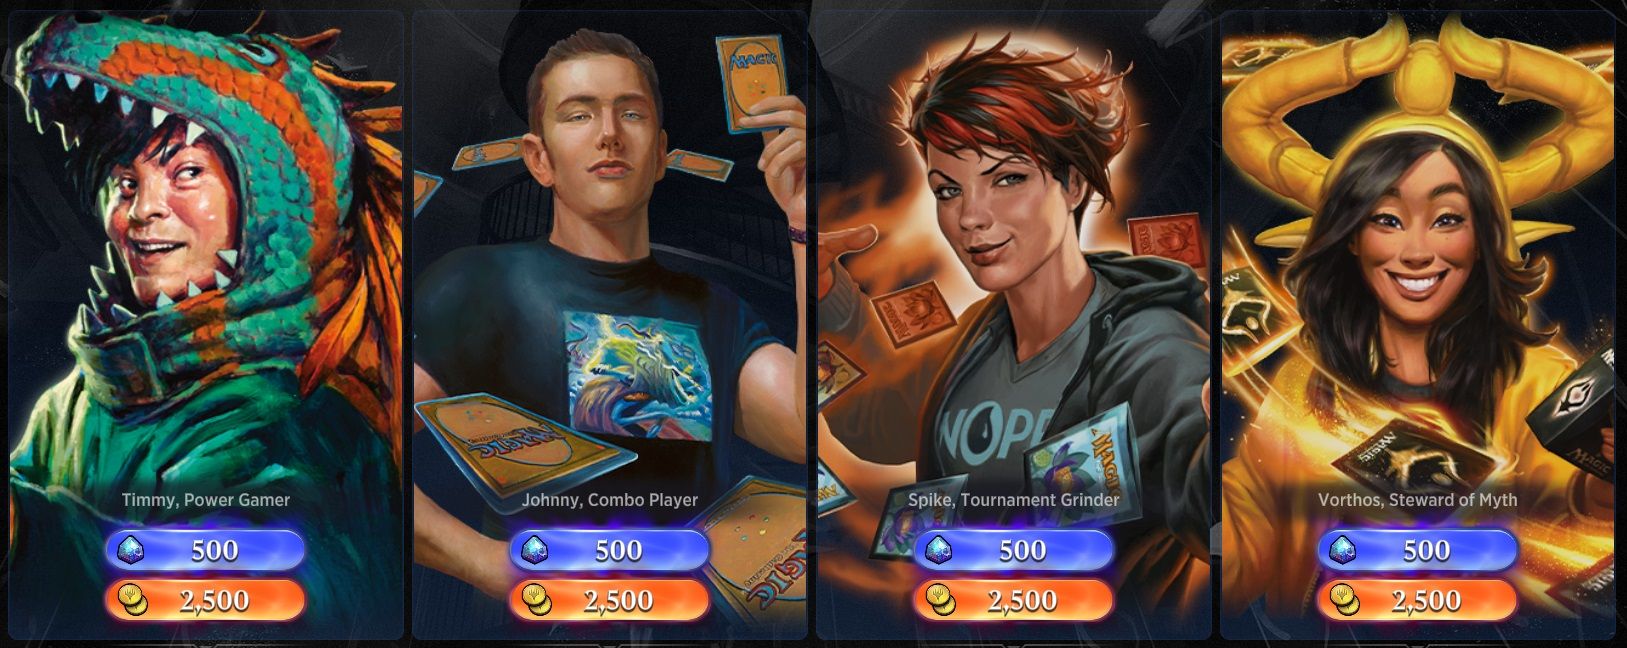 types of player - avatars